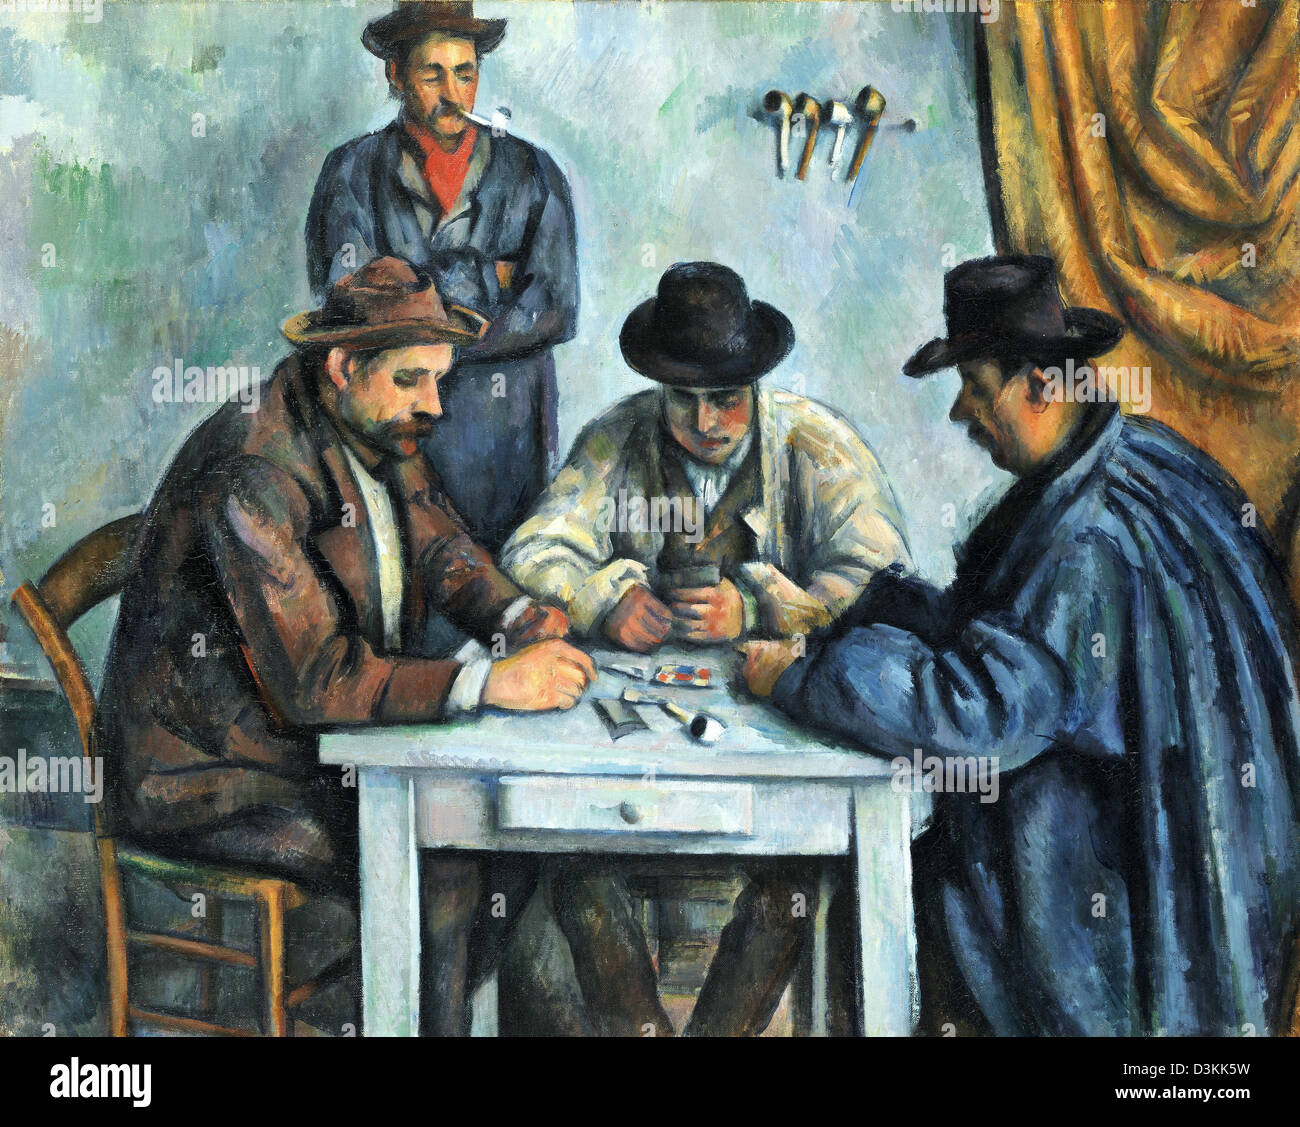 Paul Cezanne, The Card Players 1892–1893 Oil on canvas. Metropolitan Museum of Art, New York City, USA Stock Photo